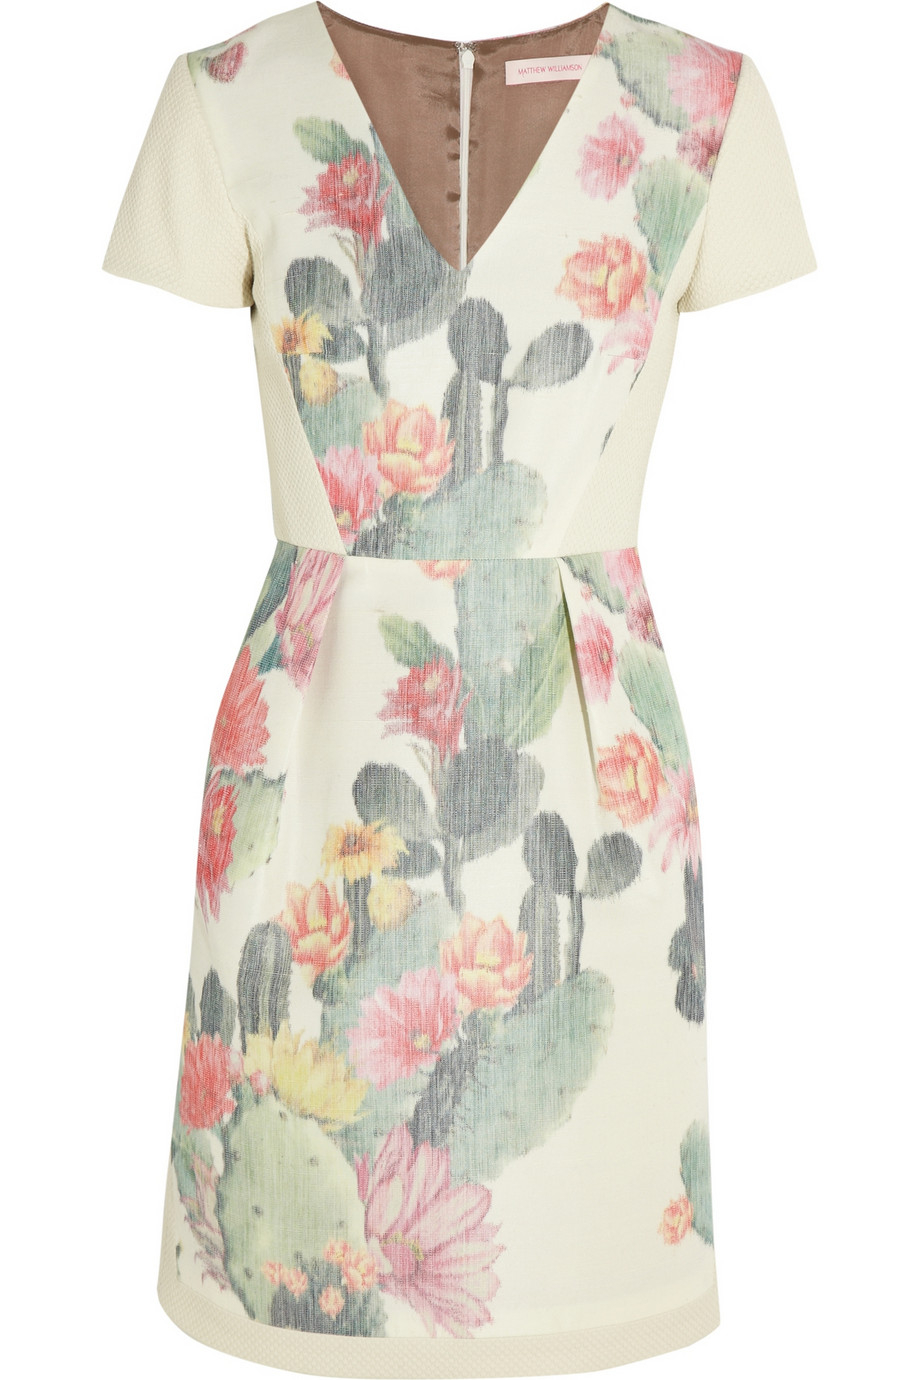 Lyst - Matthew Williamson Floral-Print Cotton And Silk-Blend Mini Dress ...